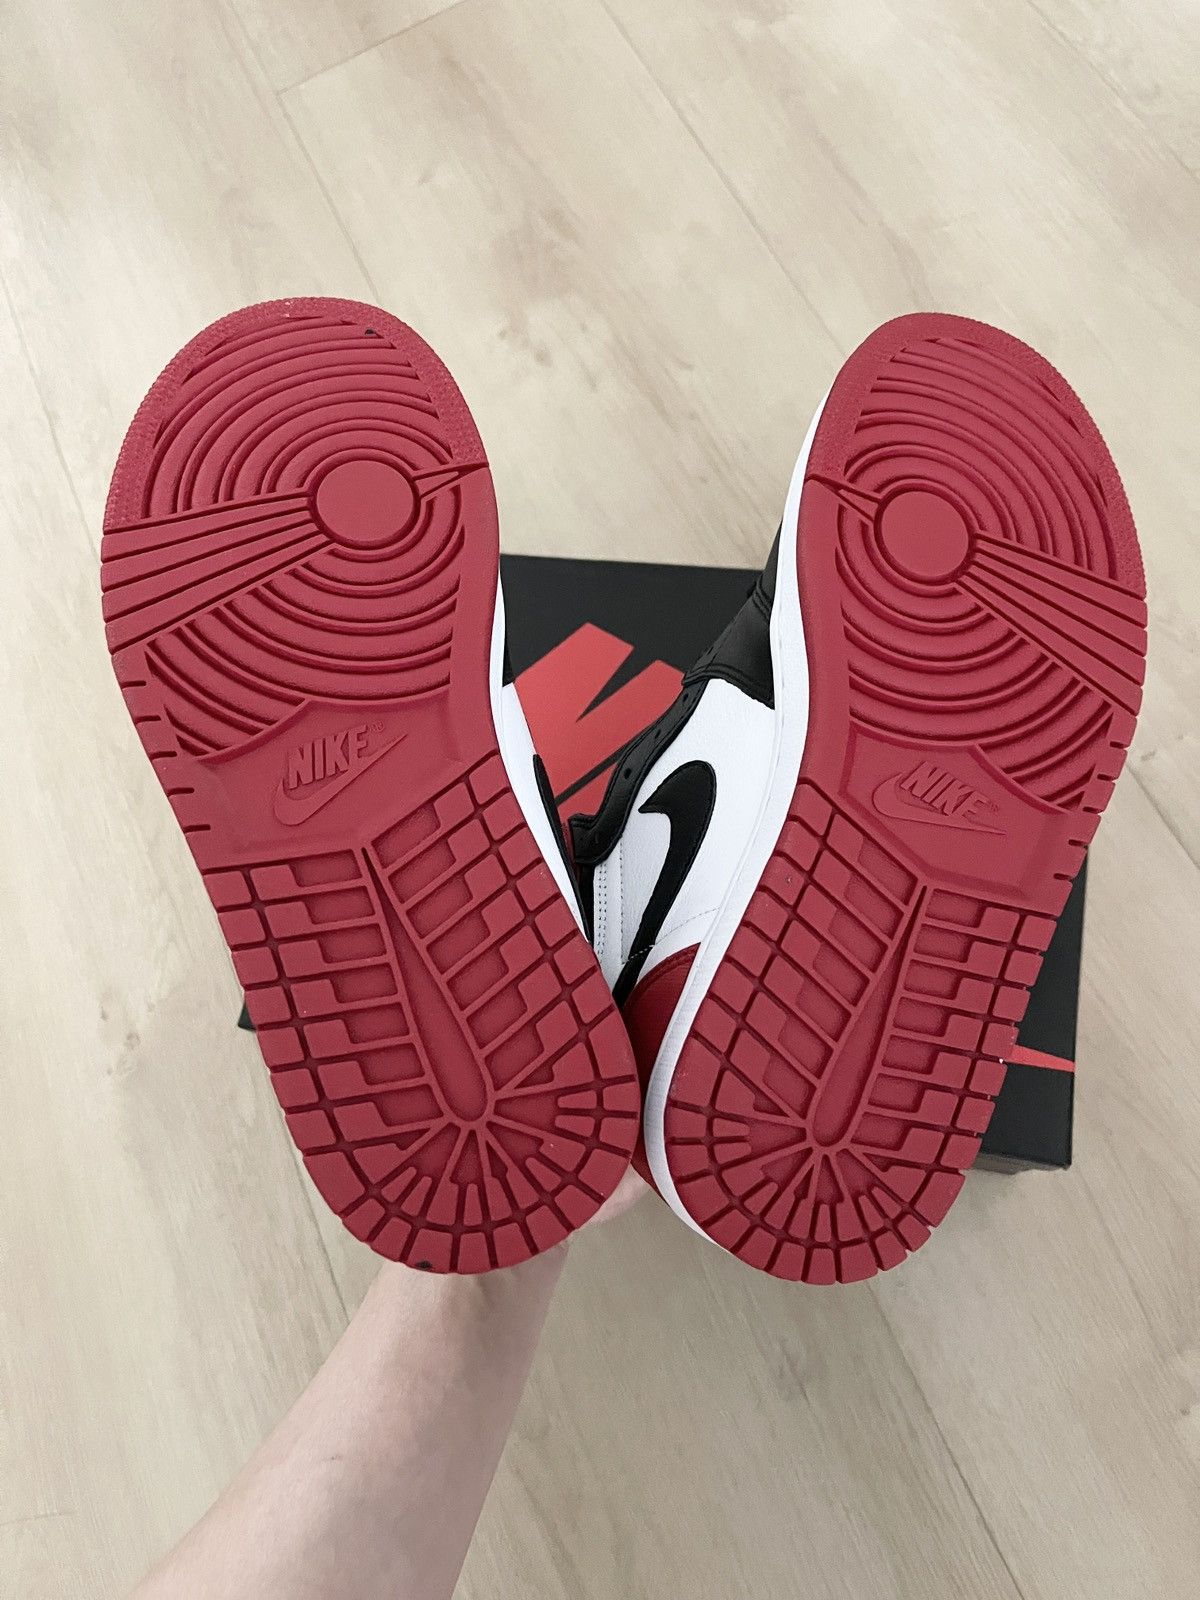 Jordan Brand - 2019 Air Jordan 1 High Saint Black Toe (Men Size 7.5) - 8